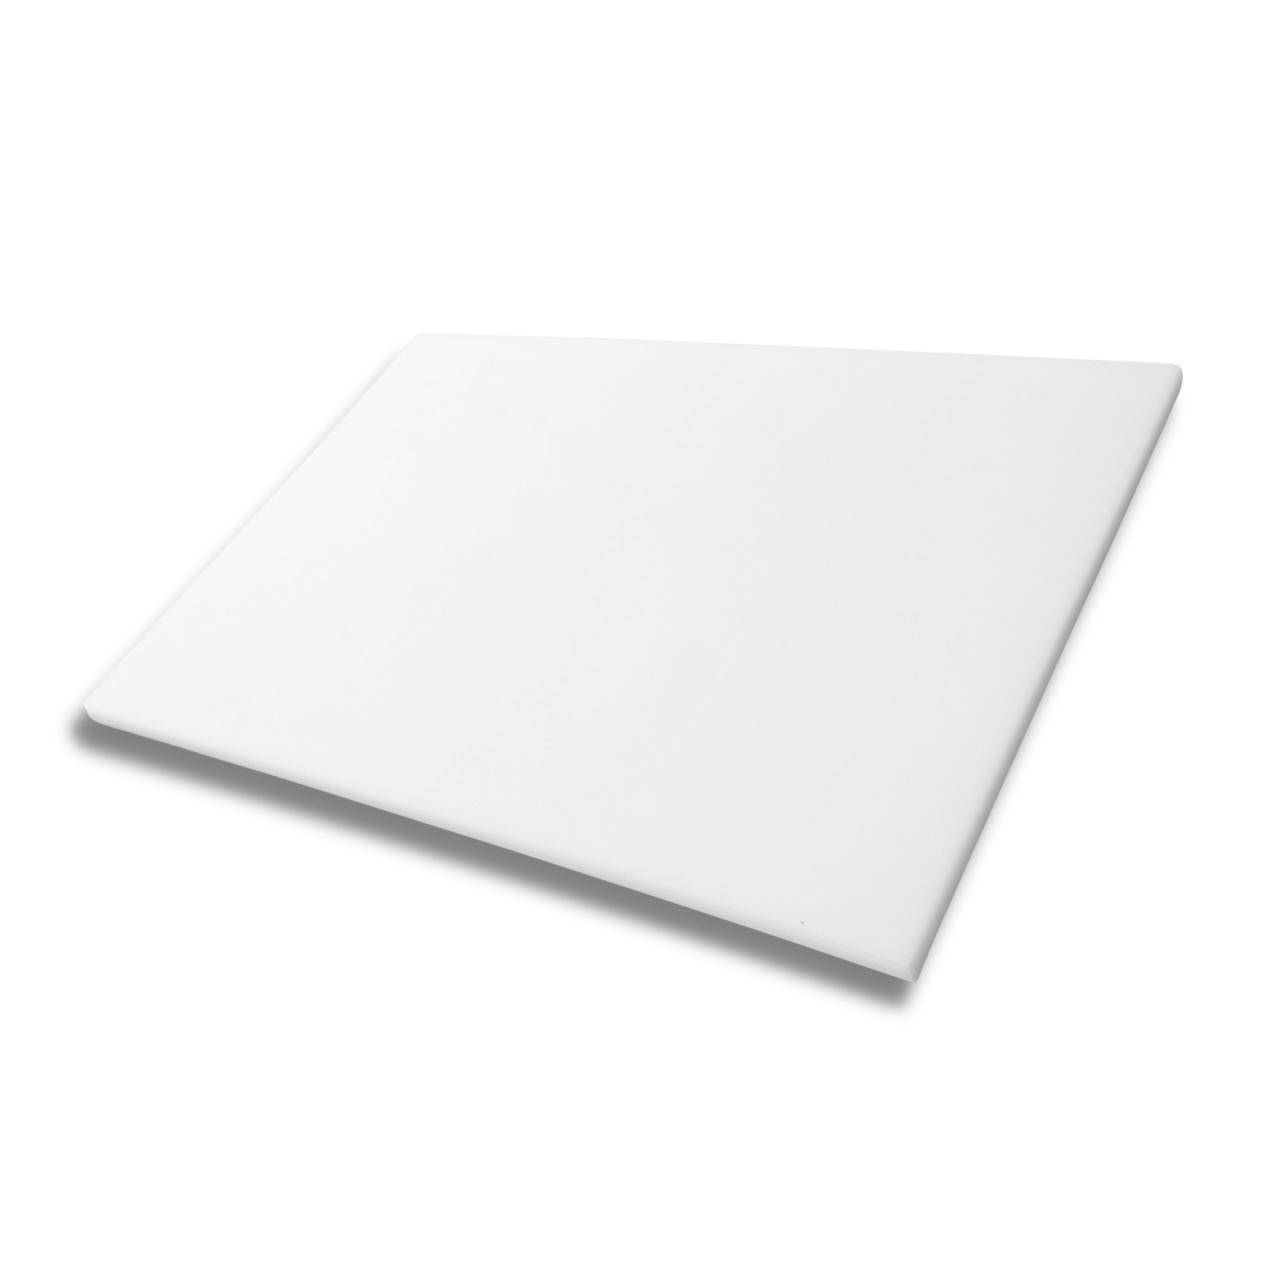 Custom Cutting Board - 1/2 Inch Thick - Tan Richlite